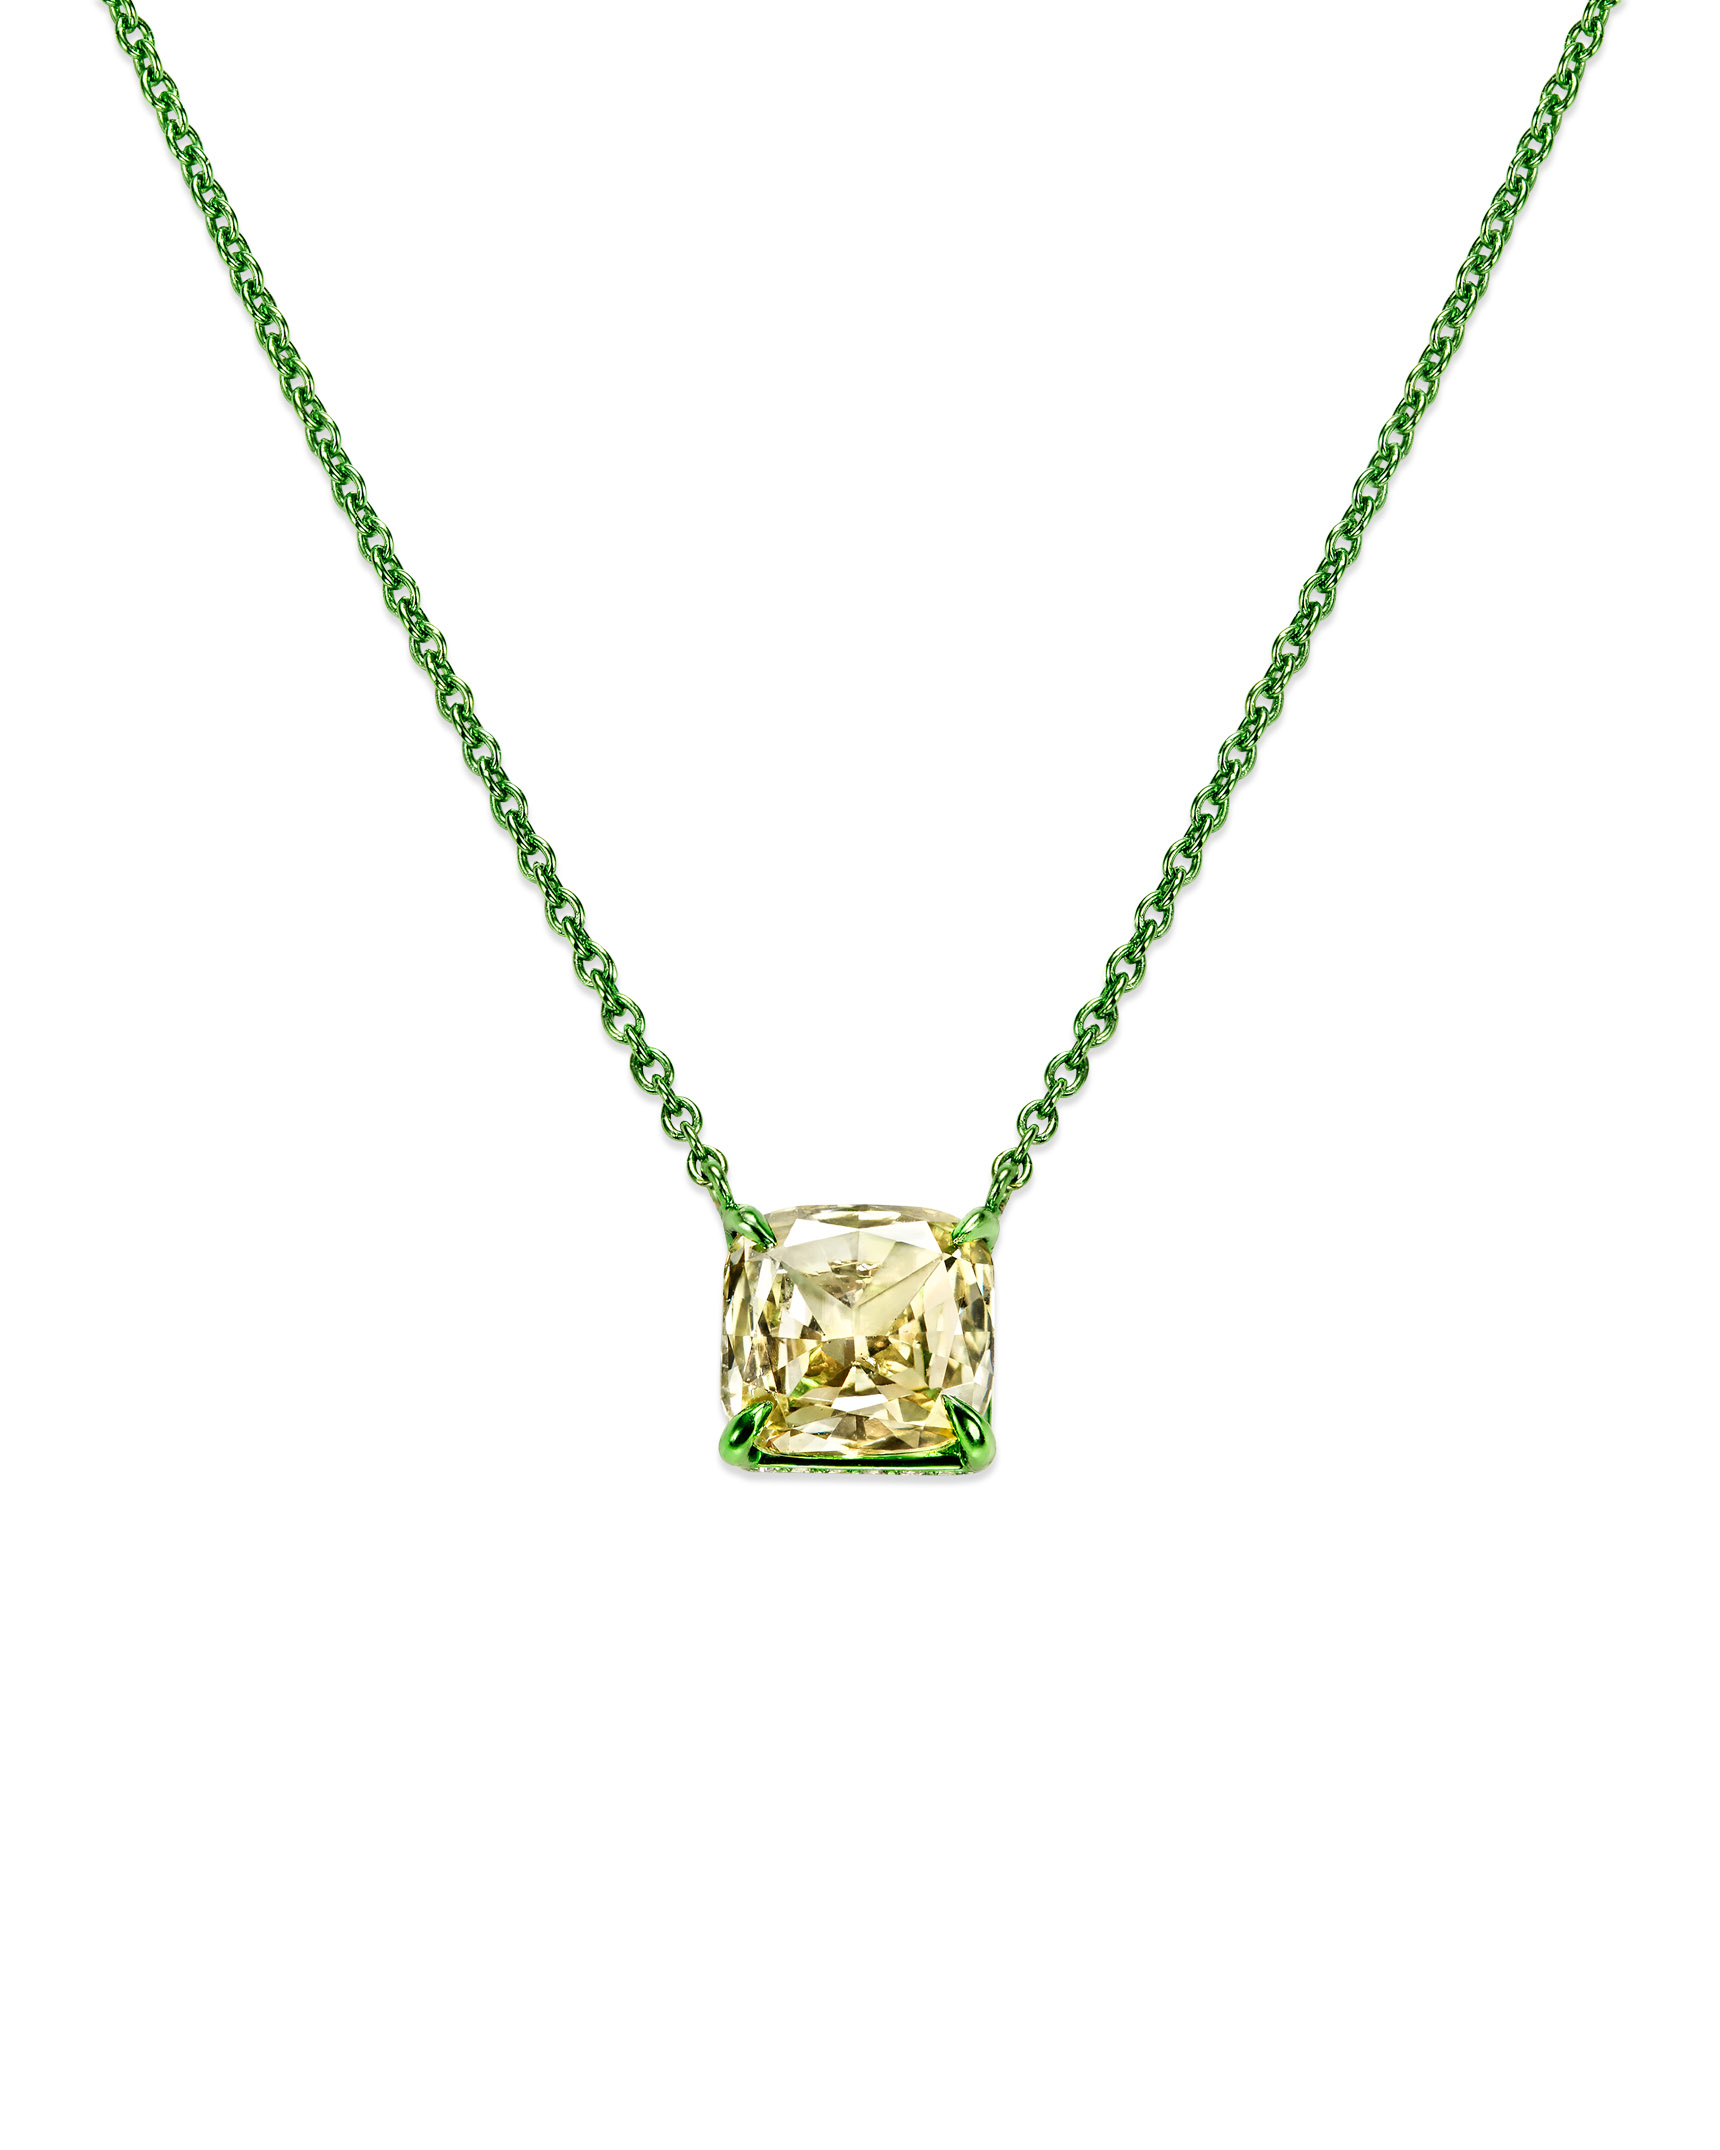 Nova Starburst Cushion Cut Diamond Pendant Necklace | Lily Flo Jewelry |  Wolf & Badger